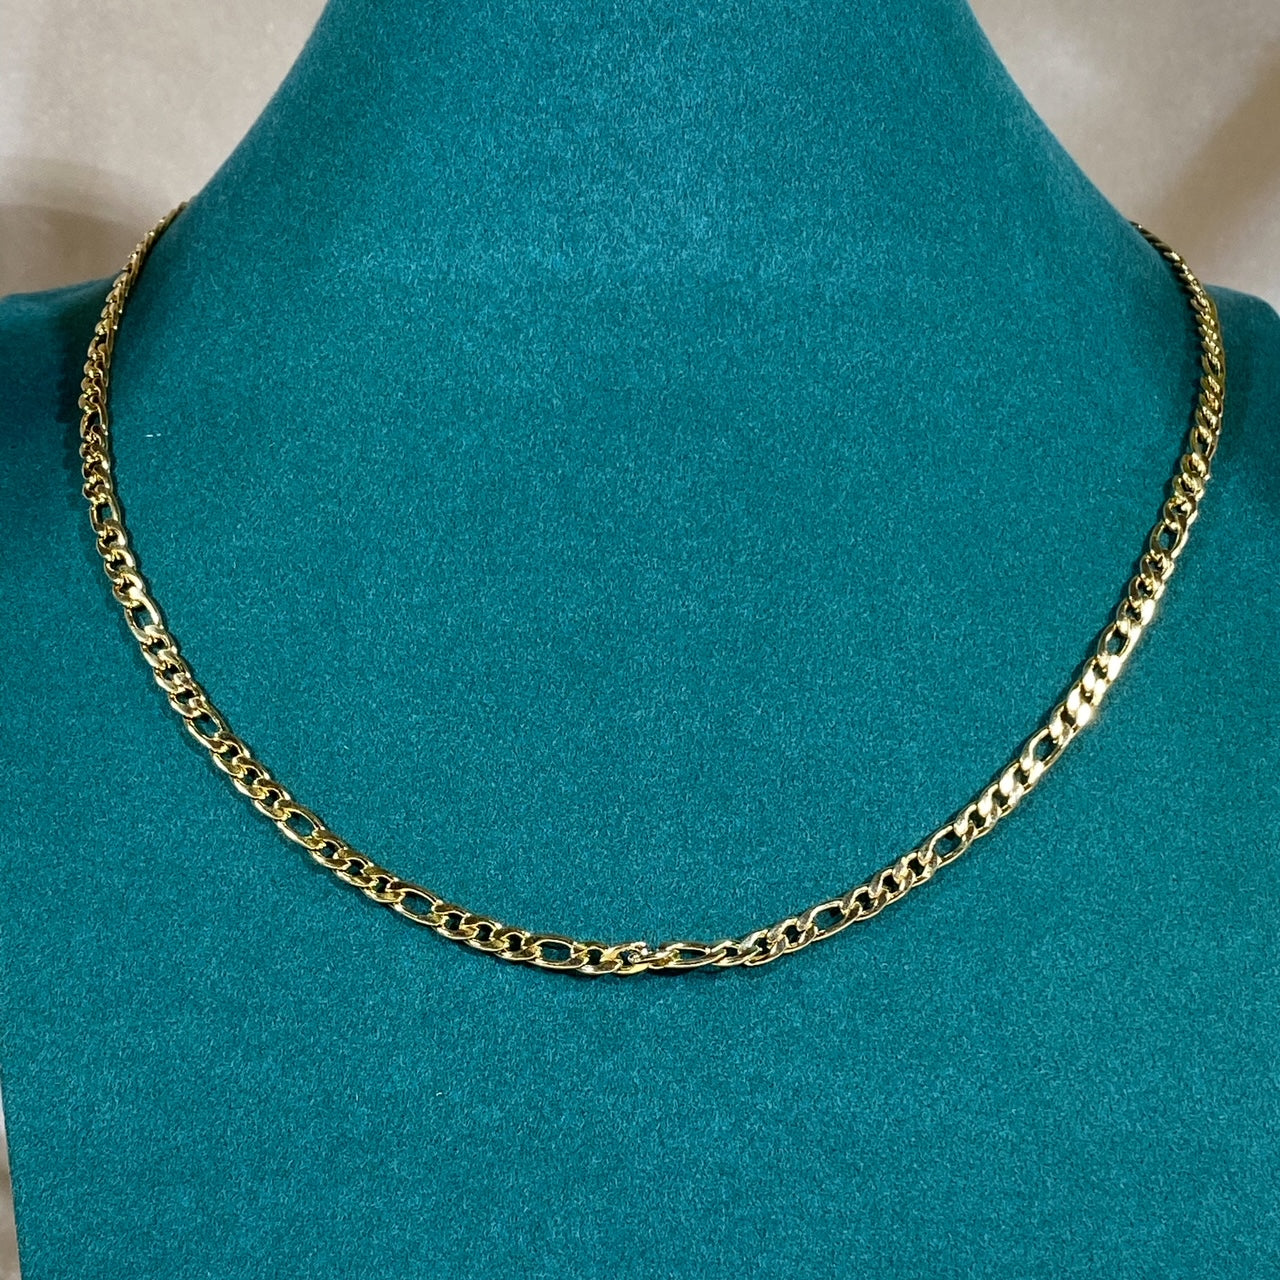 Joan necklace